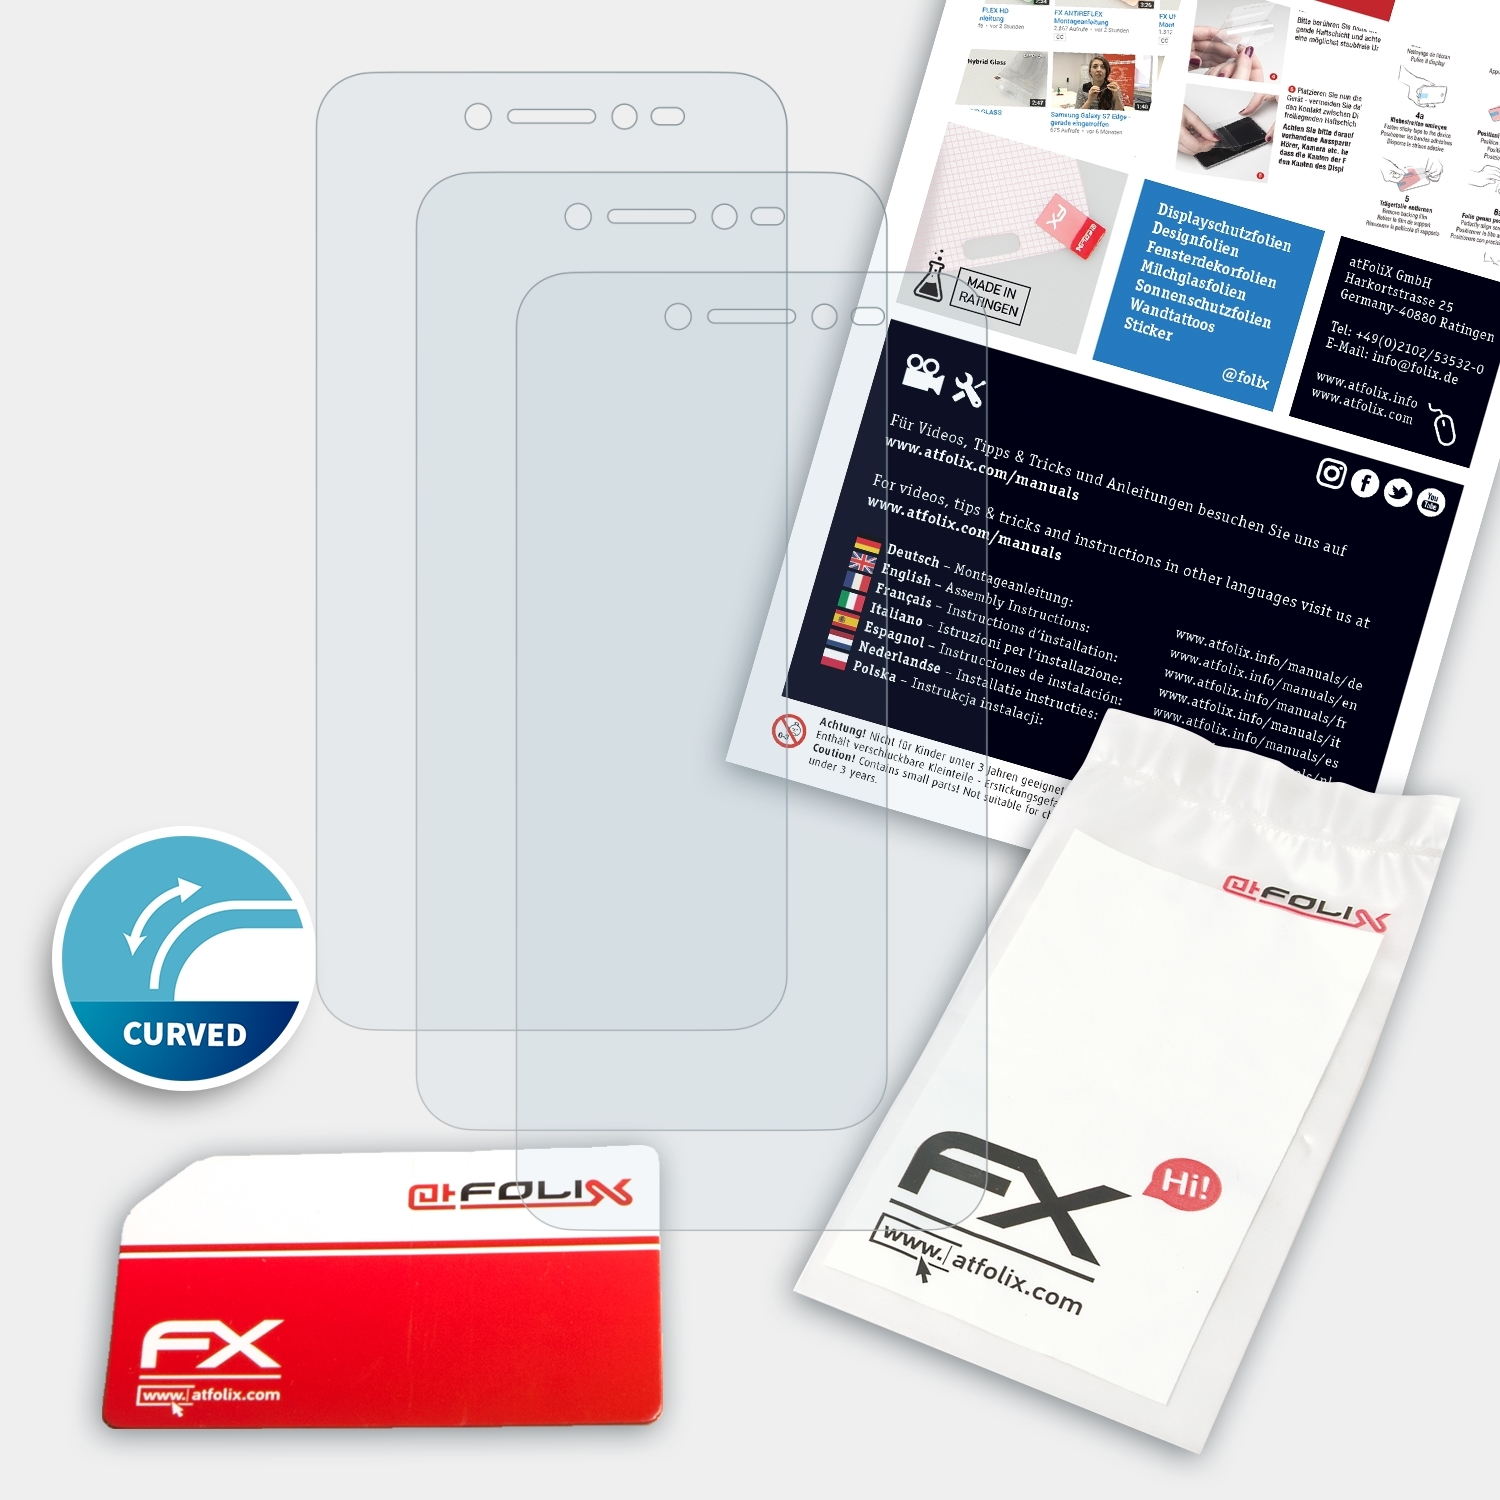 ATFOLIX 3x Live) Asus Displayschutz(für FX-ActiFleX ZenFone